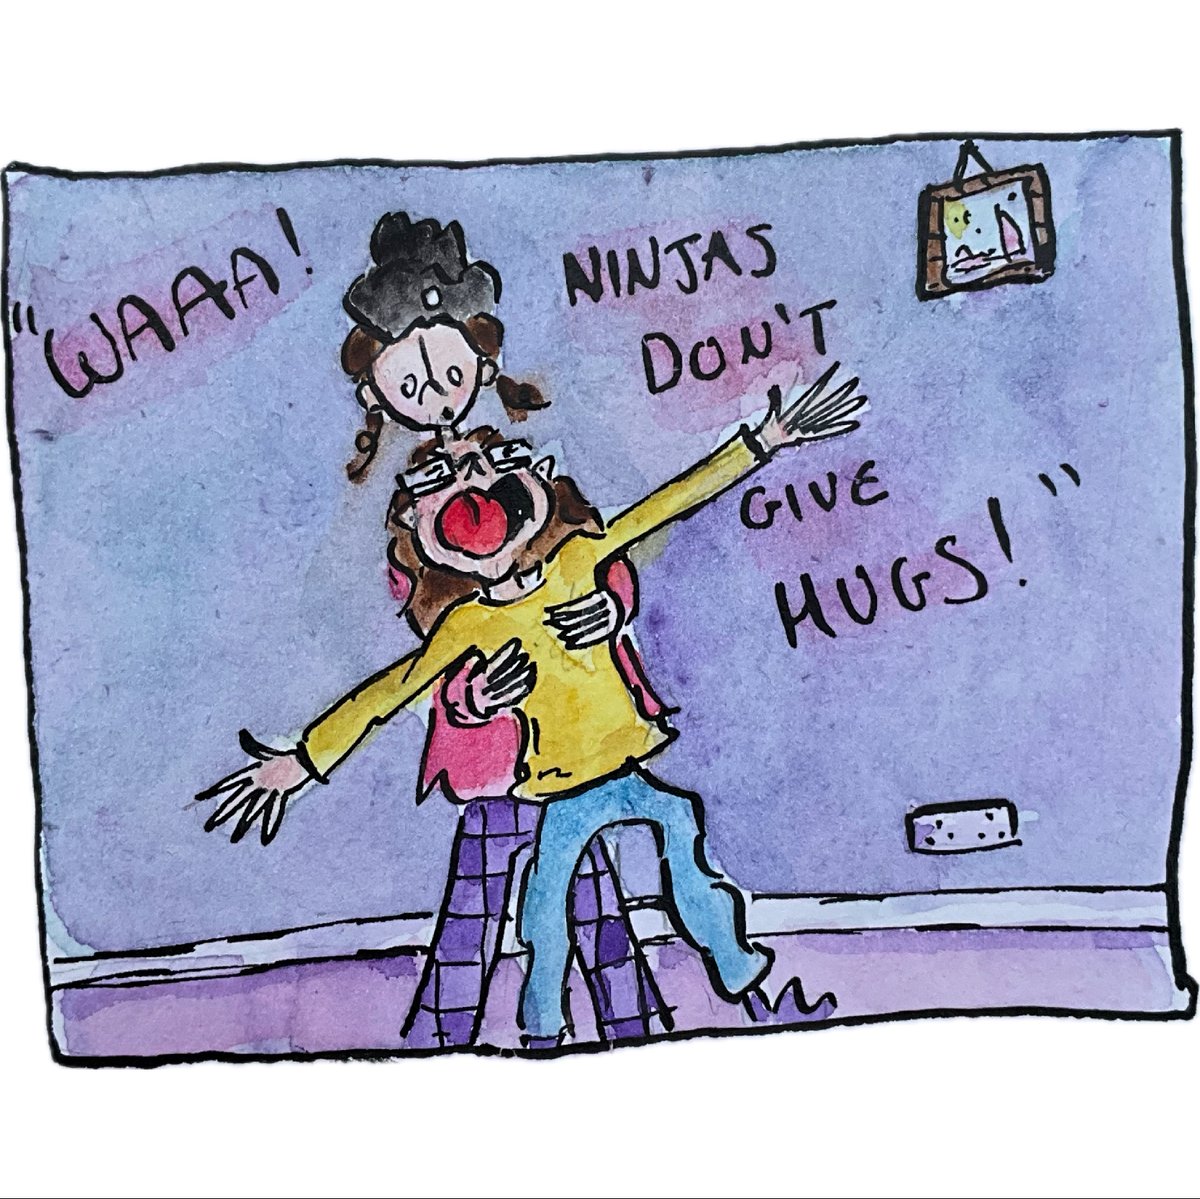 She really doesn’t like hugs! #hug #watercolour #parent #parentinglife #parenting #sisters #sisterlove #doodles #doodling #doodlediary #artdiary #artjournal #sisterhugs #parentlife #hugs #journalart #art #familyfun  #doodler #daughters #daughterlove #familylife #family #familyhug